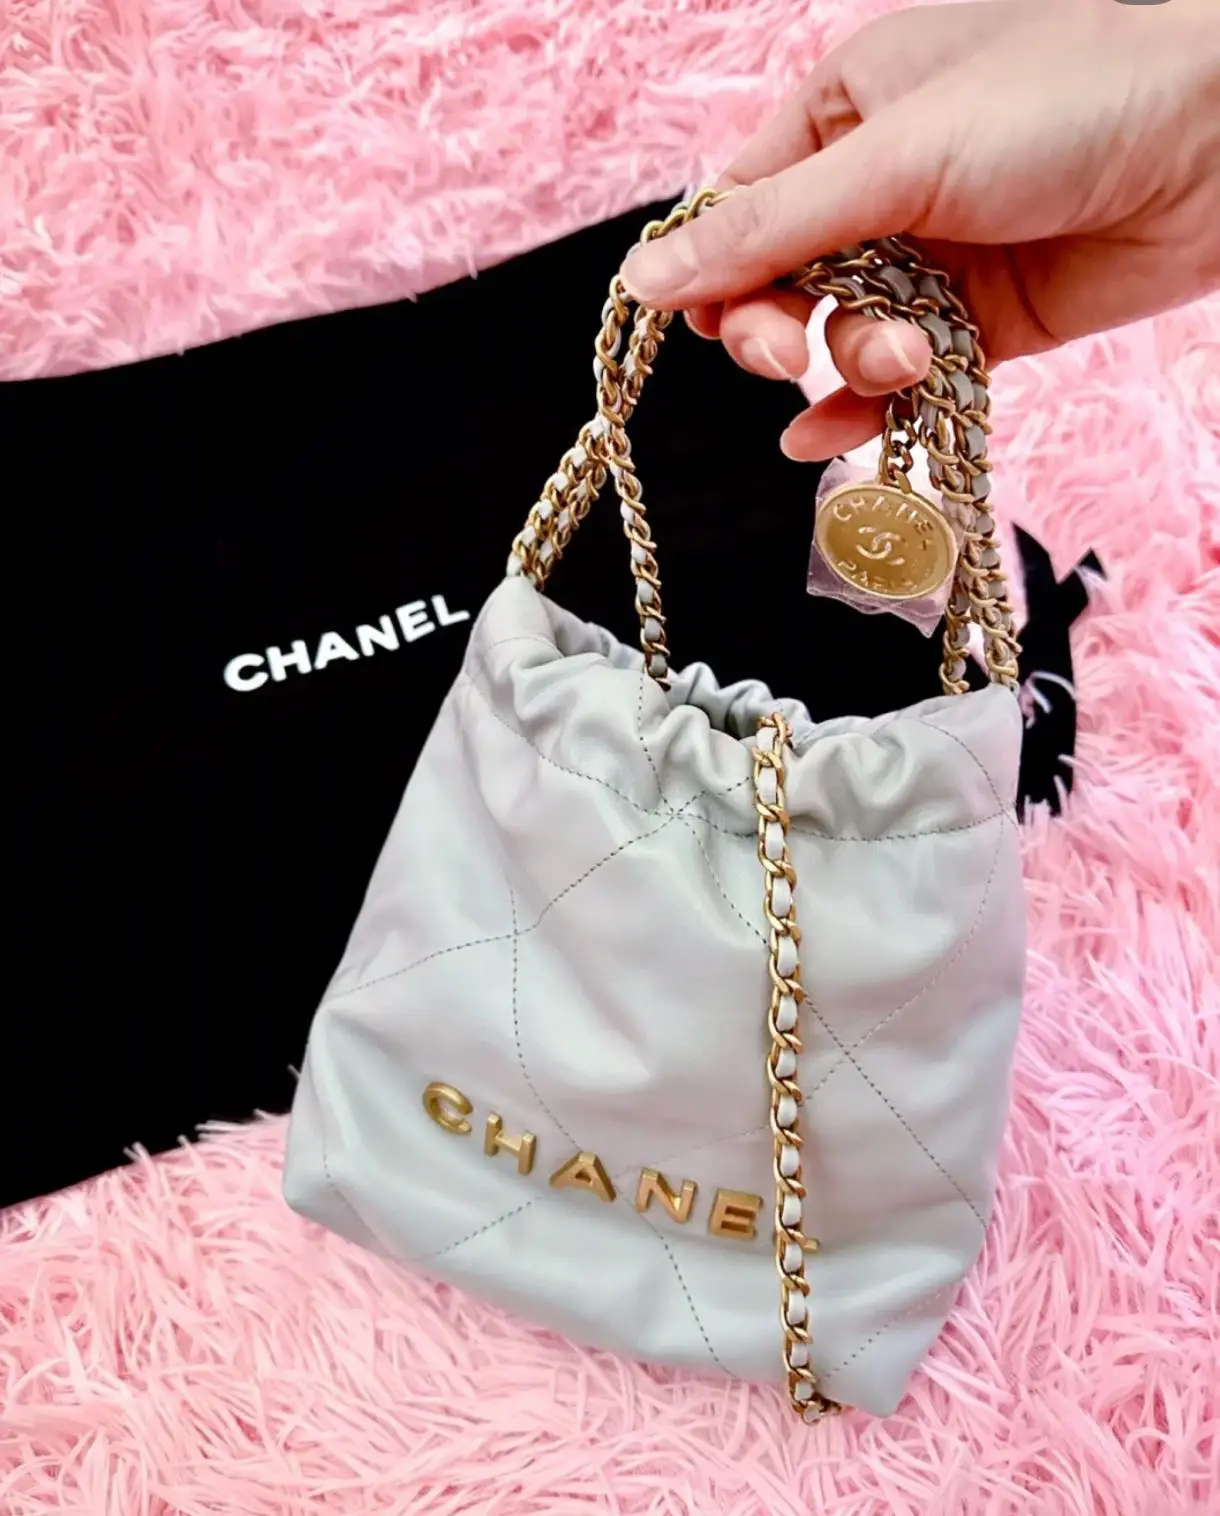 23 new color garbage bags, Chanel bag mini haze b